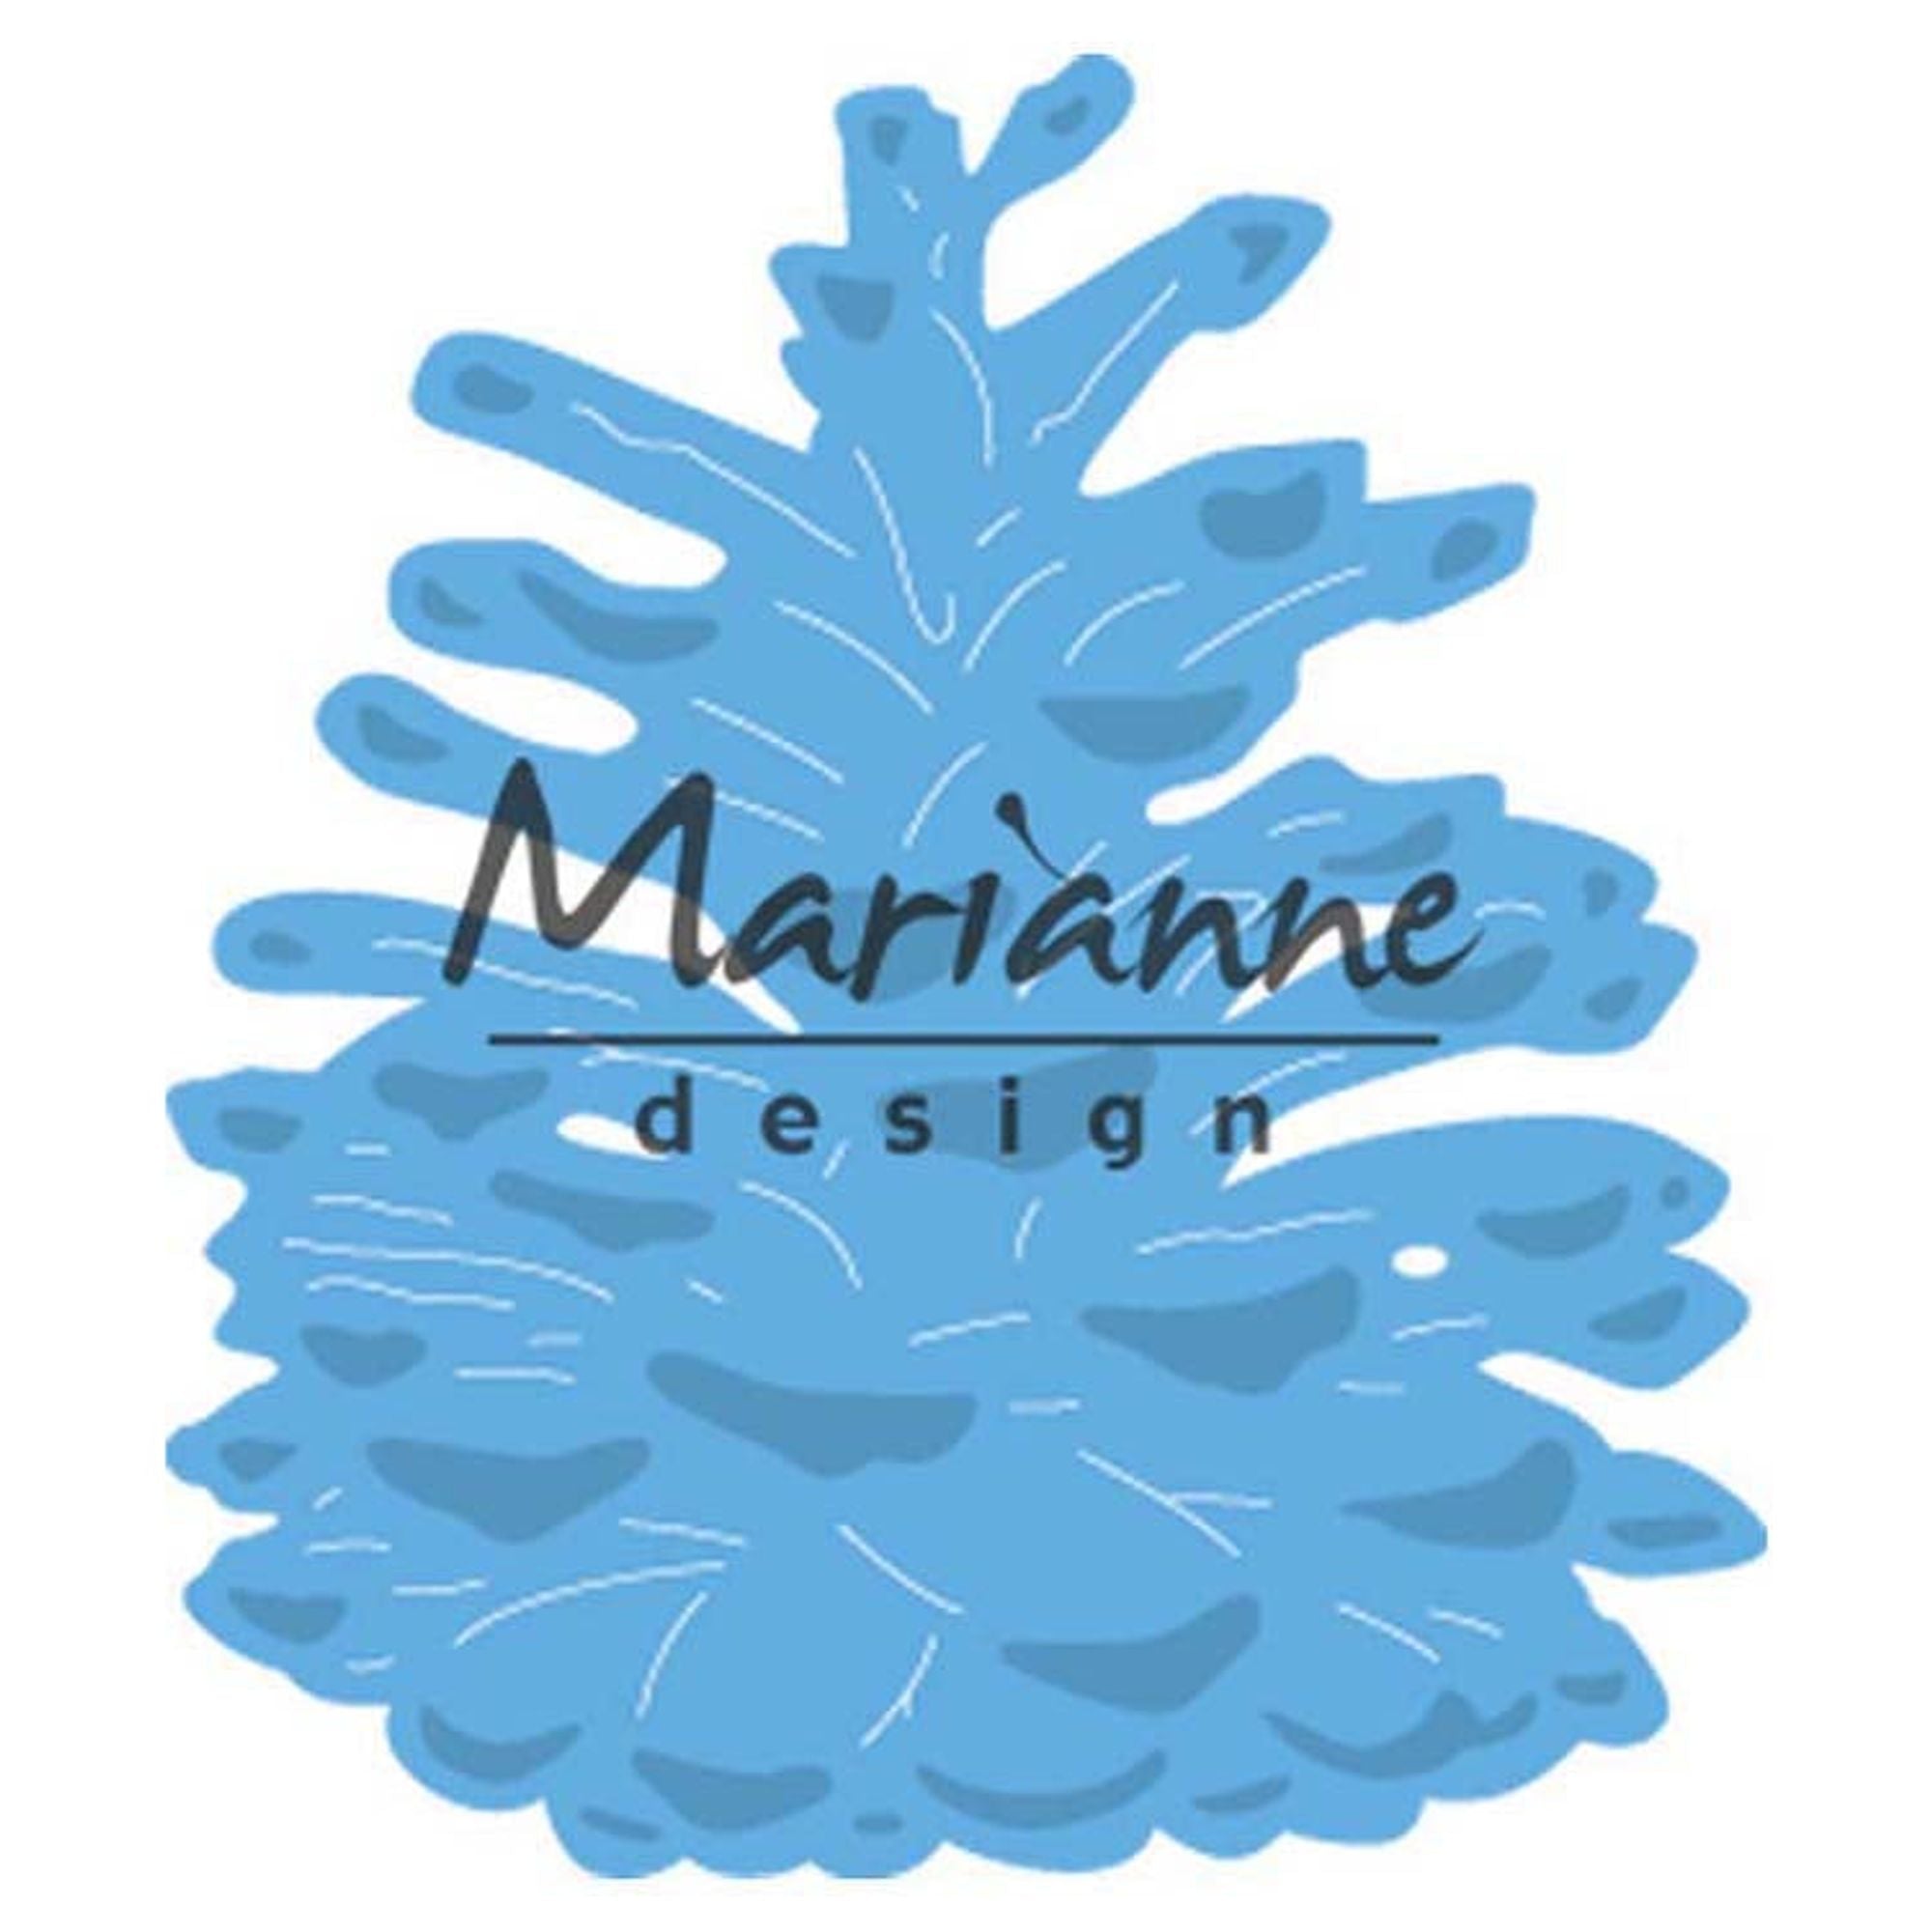 Marianne Design Creatables Tiny's Pine Cone